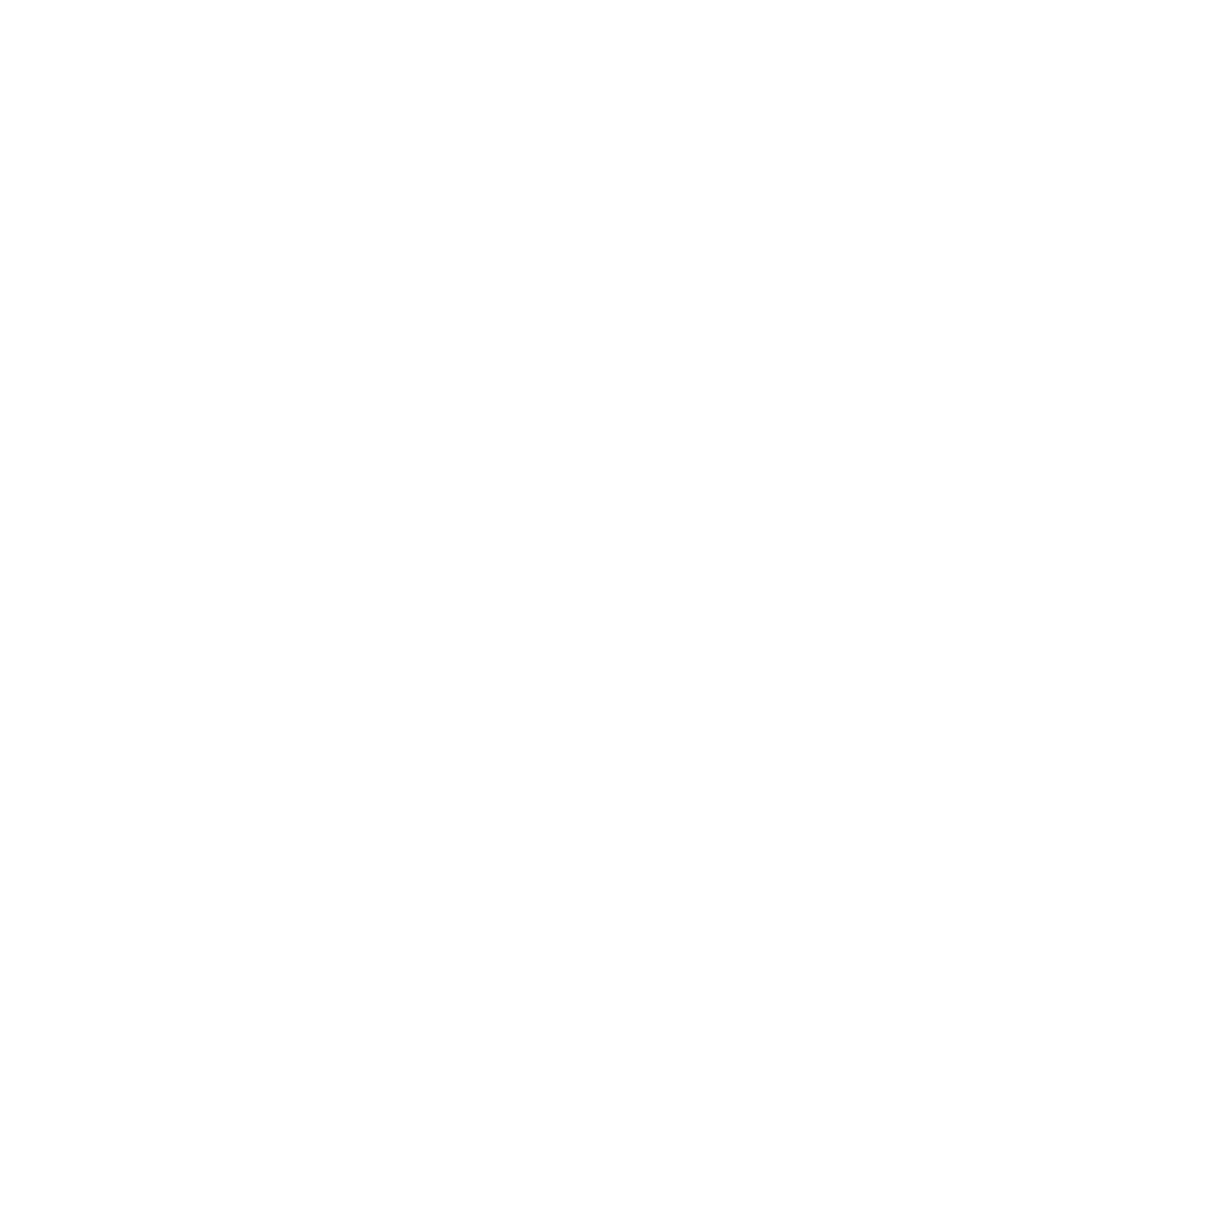 Big G Logo - Home - Big G Creative